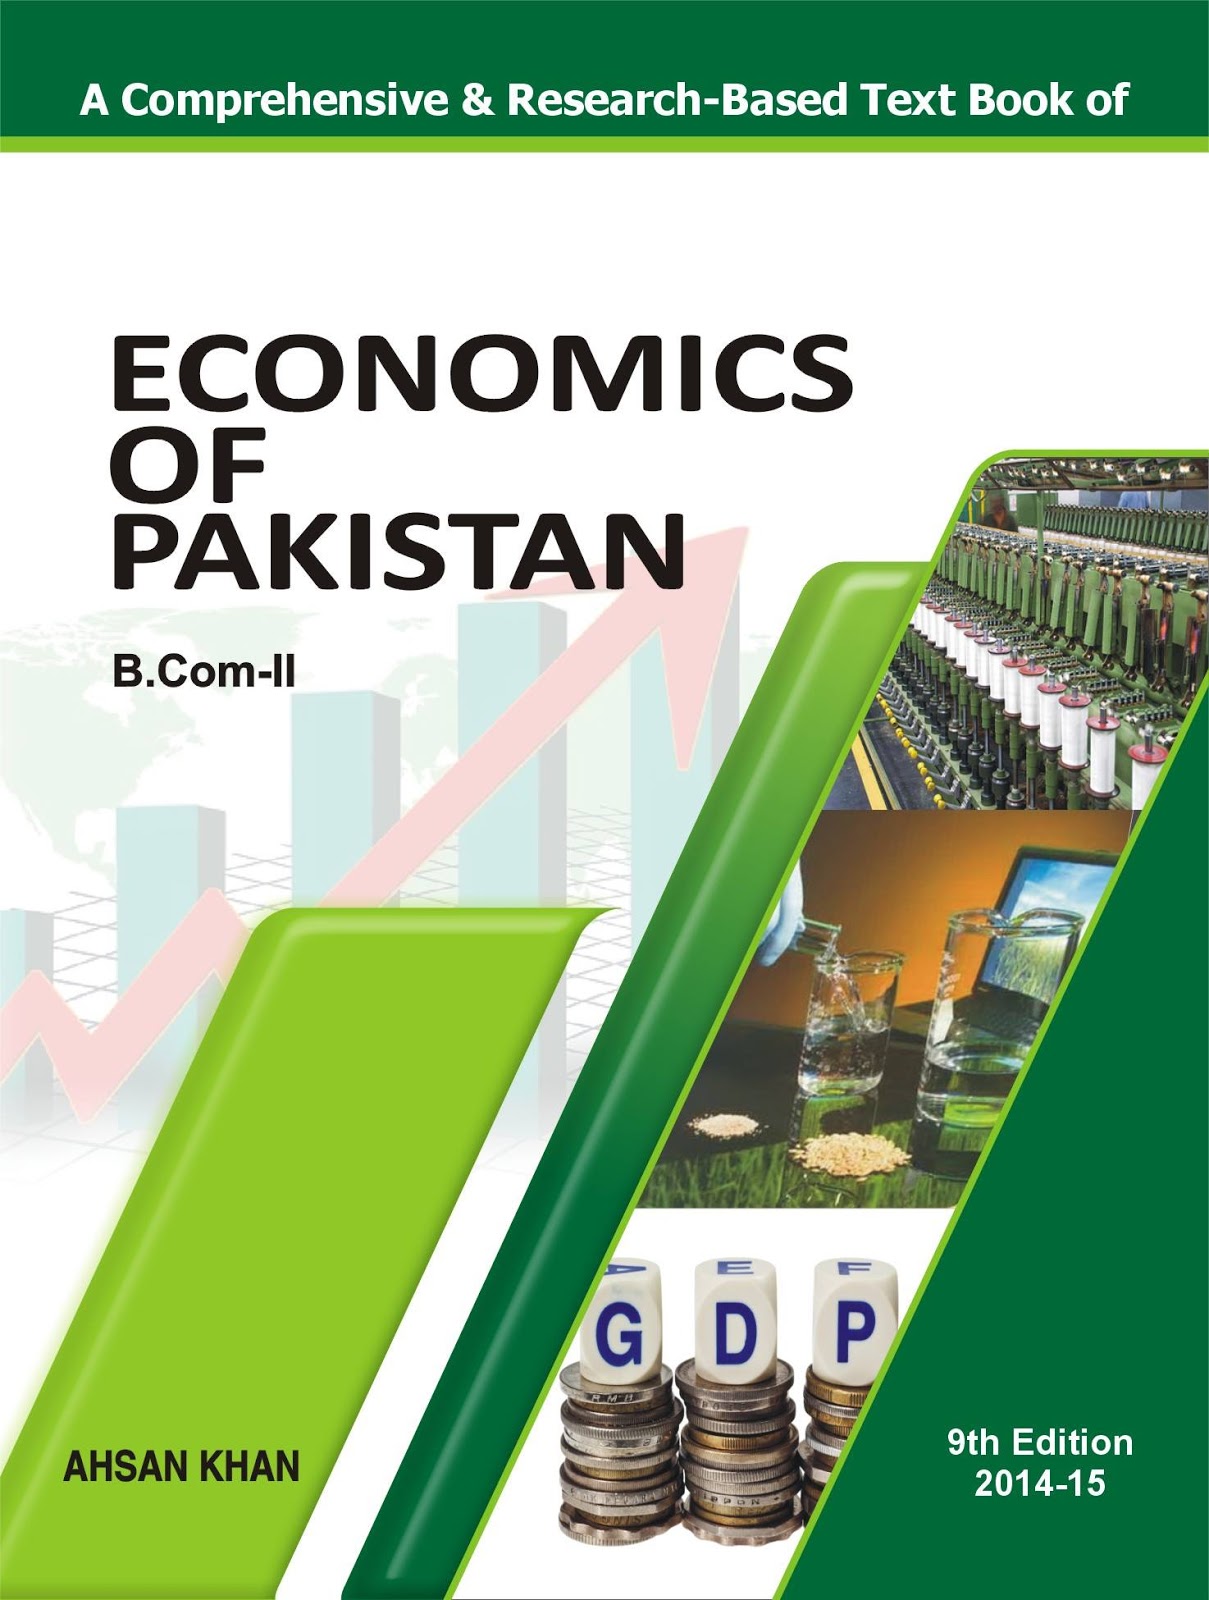 economics research topics in pakistan